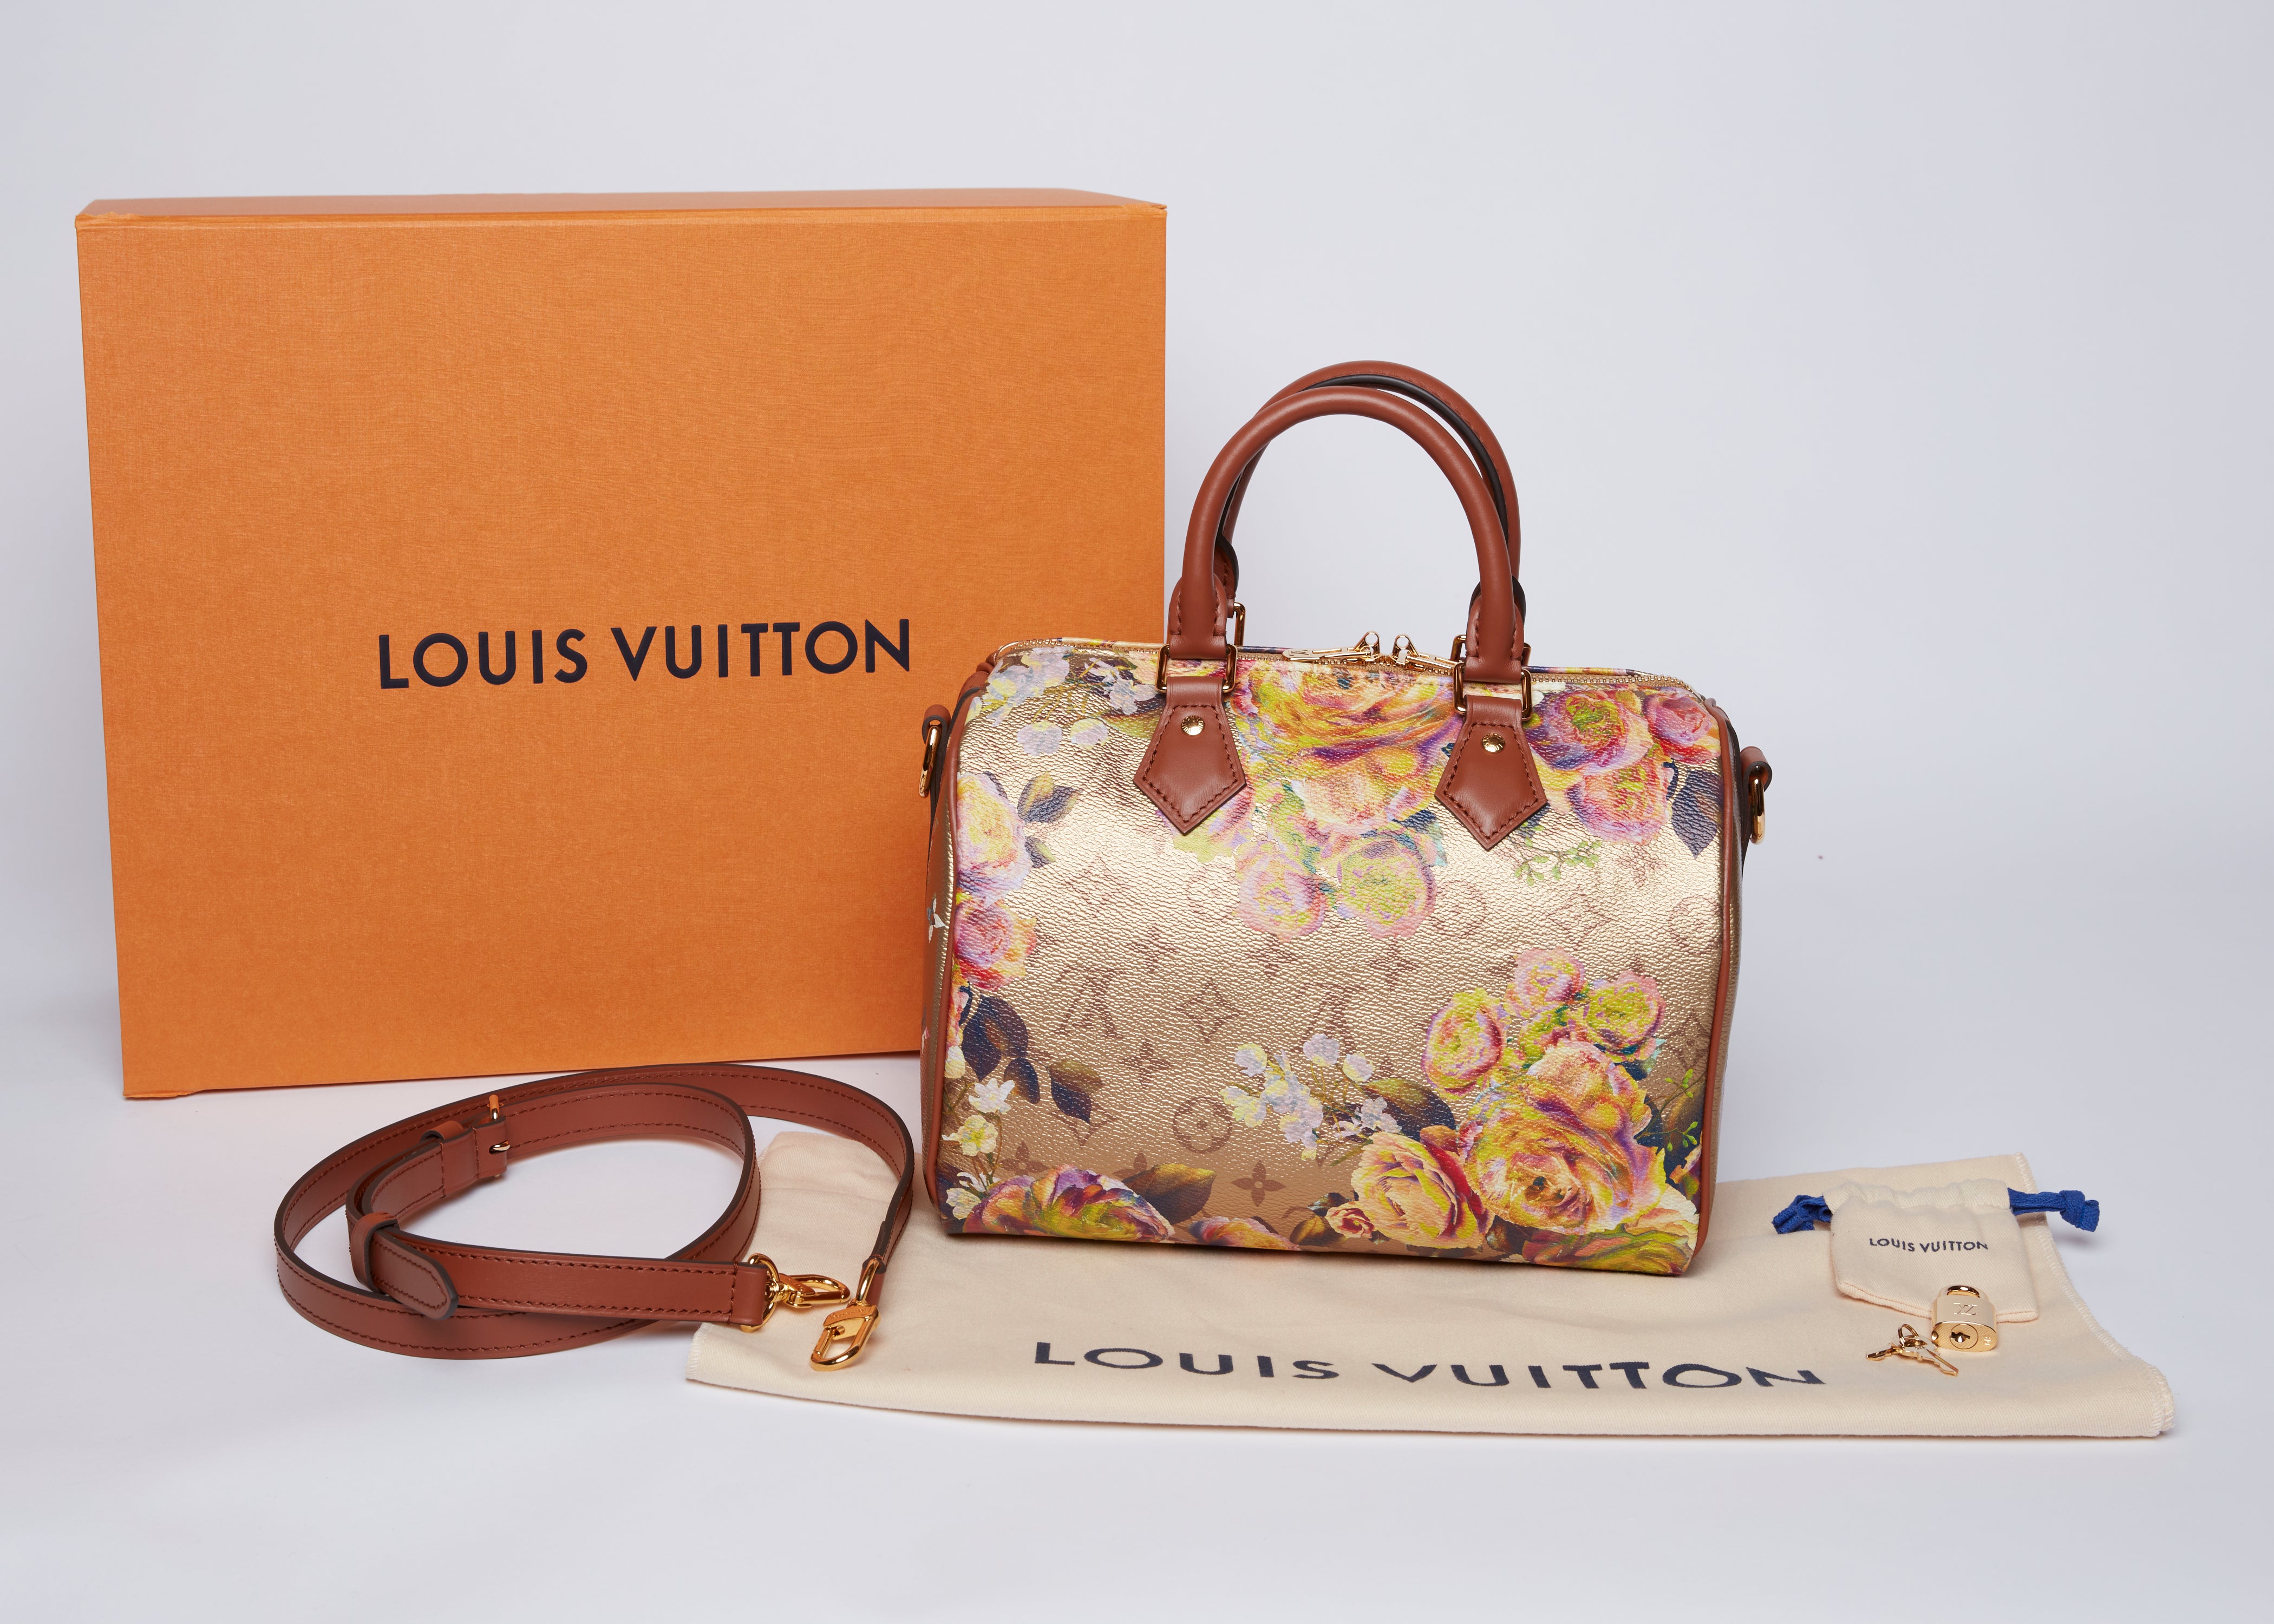 Louis Vuitton Garden Collection Speedy B 25 #louisvuitton